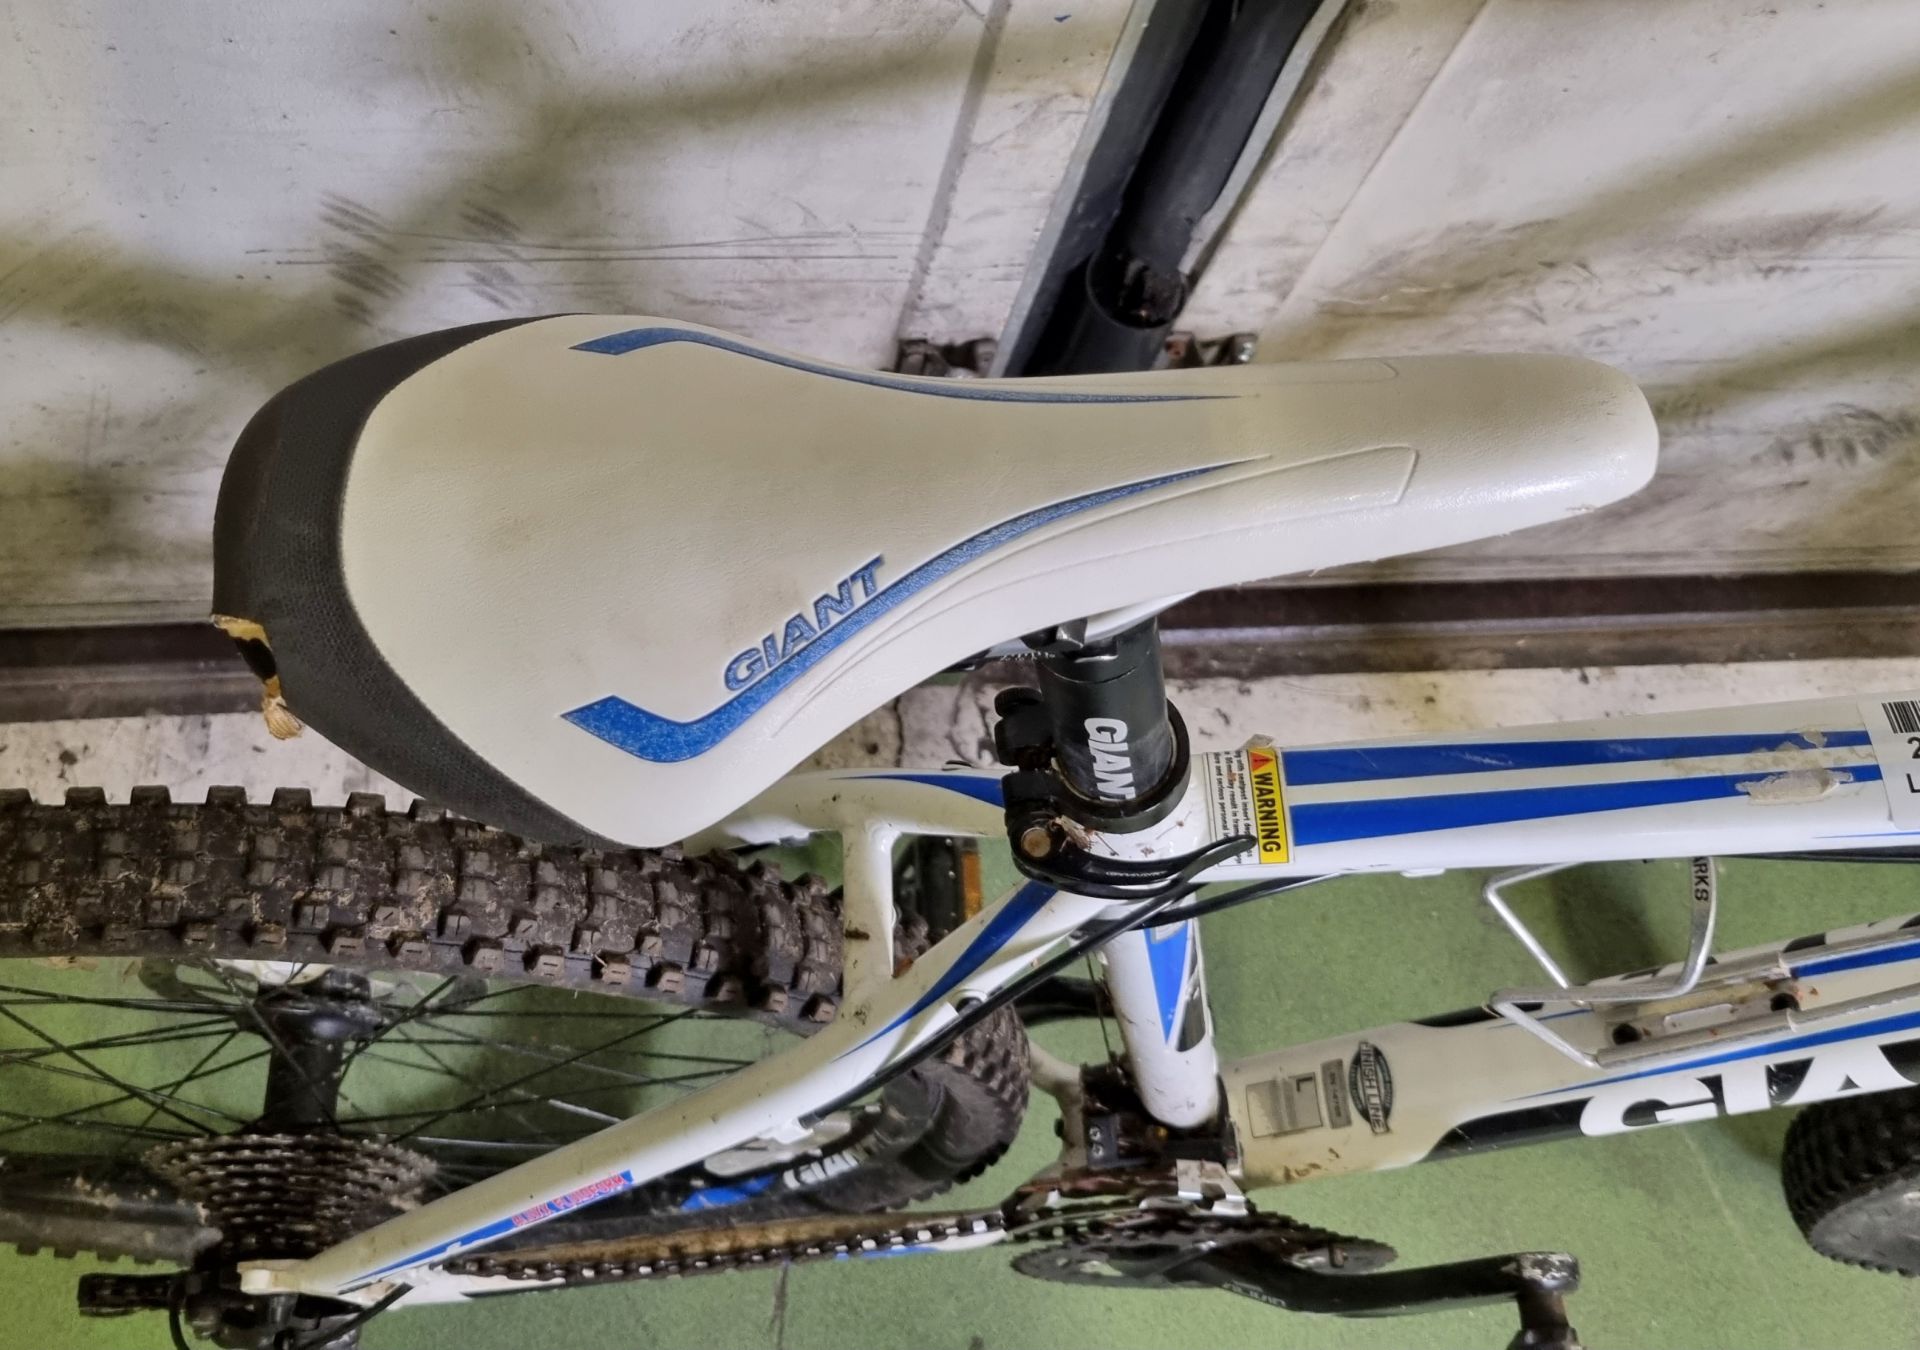 Giant Talon hardtail mountain bike - large frame size - 26 inch wheels - 3x8 Shimano drivetrain - Image 9 of 10